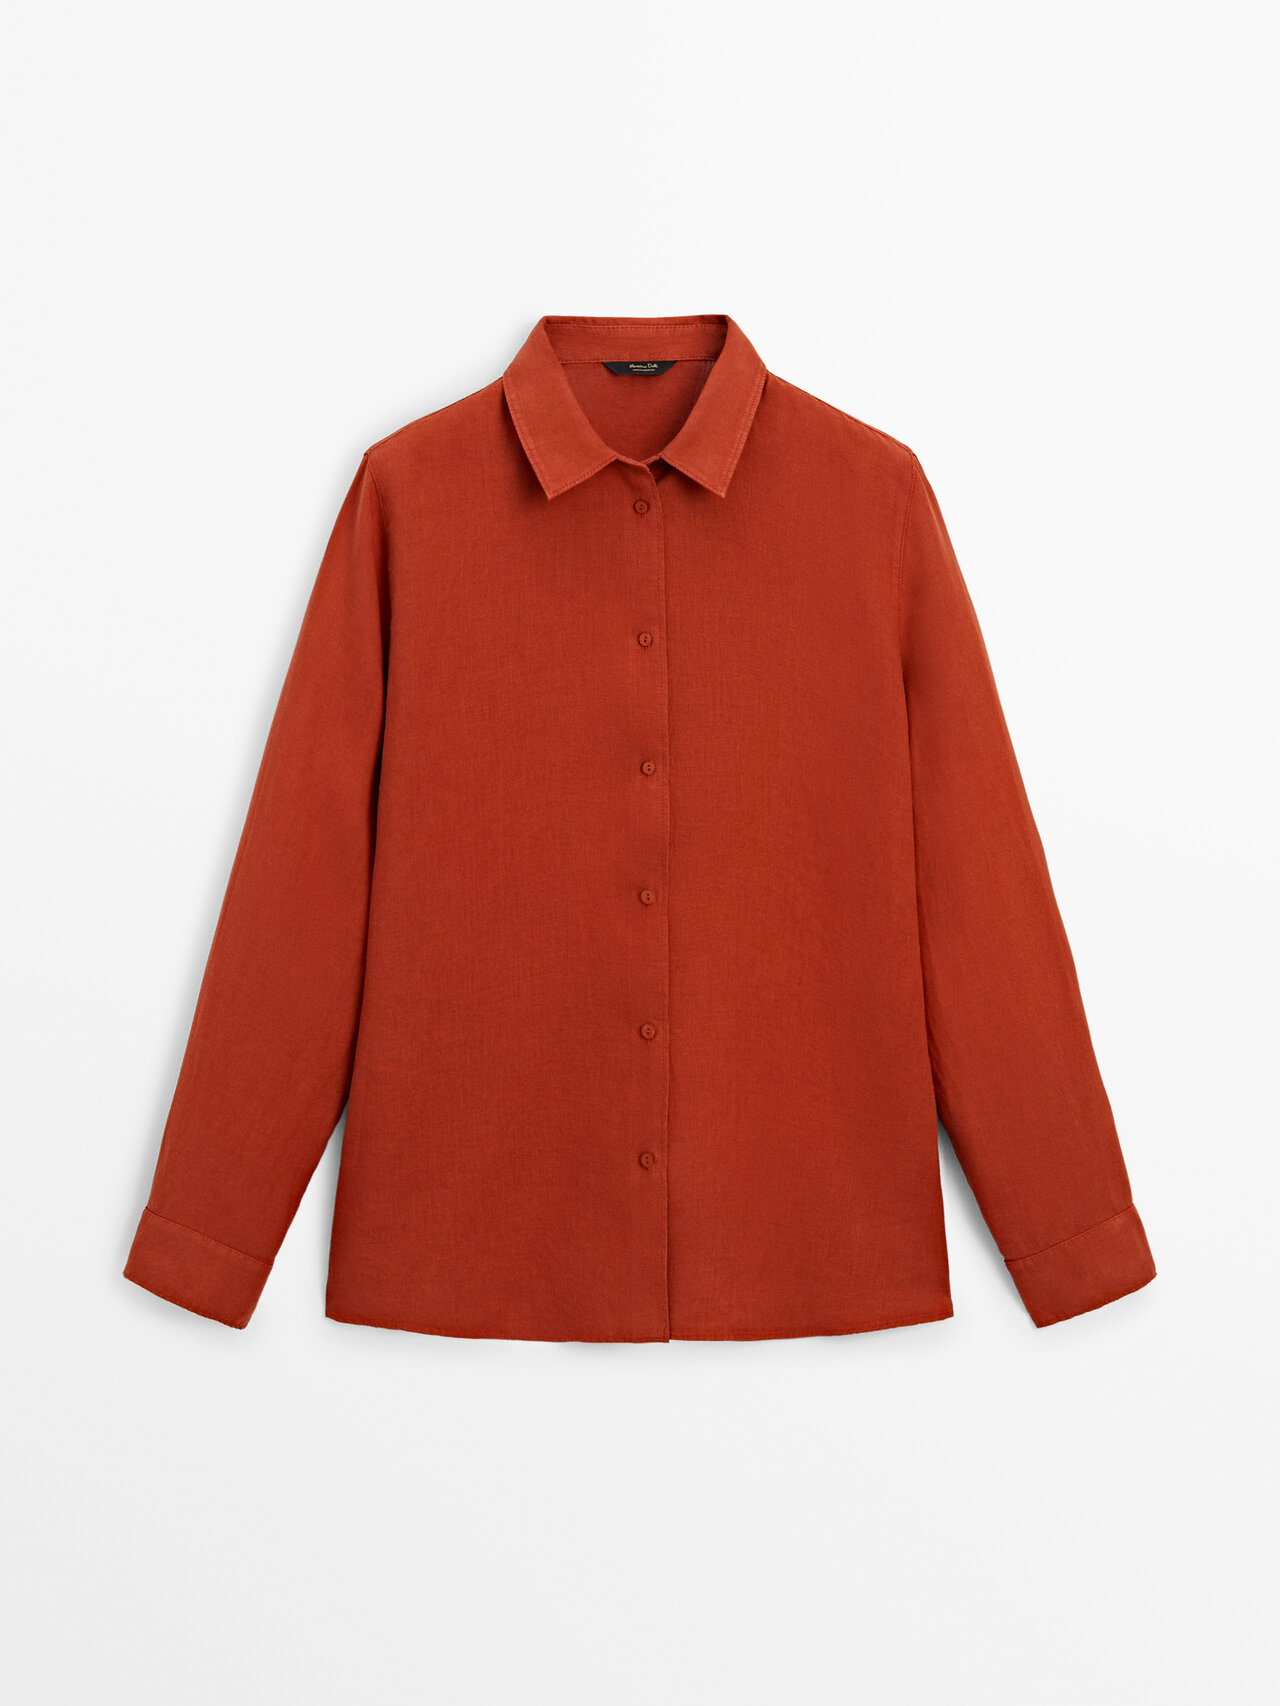 Massimo Dutti 100% Linen Shirt In Burnt Orange